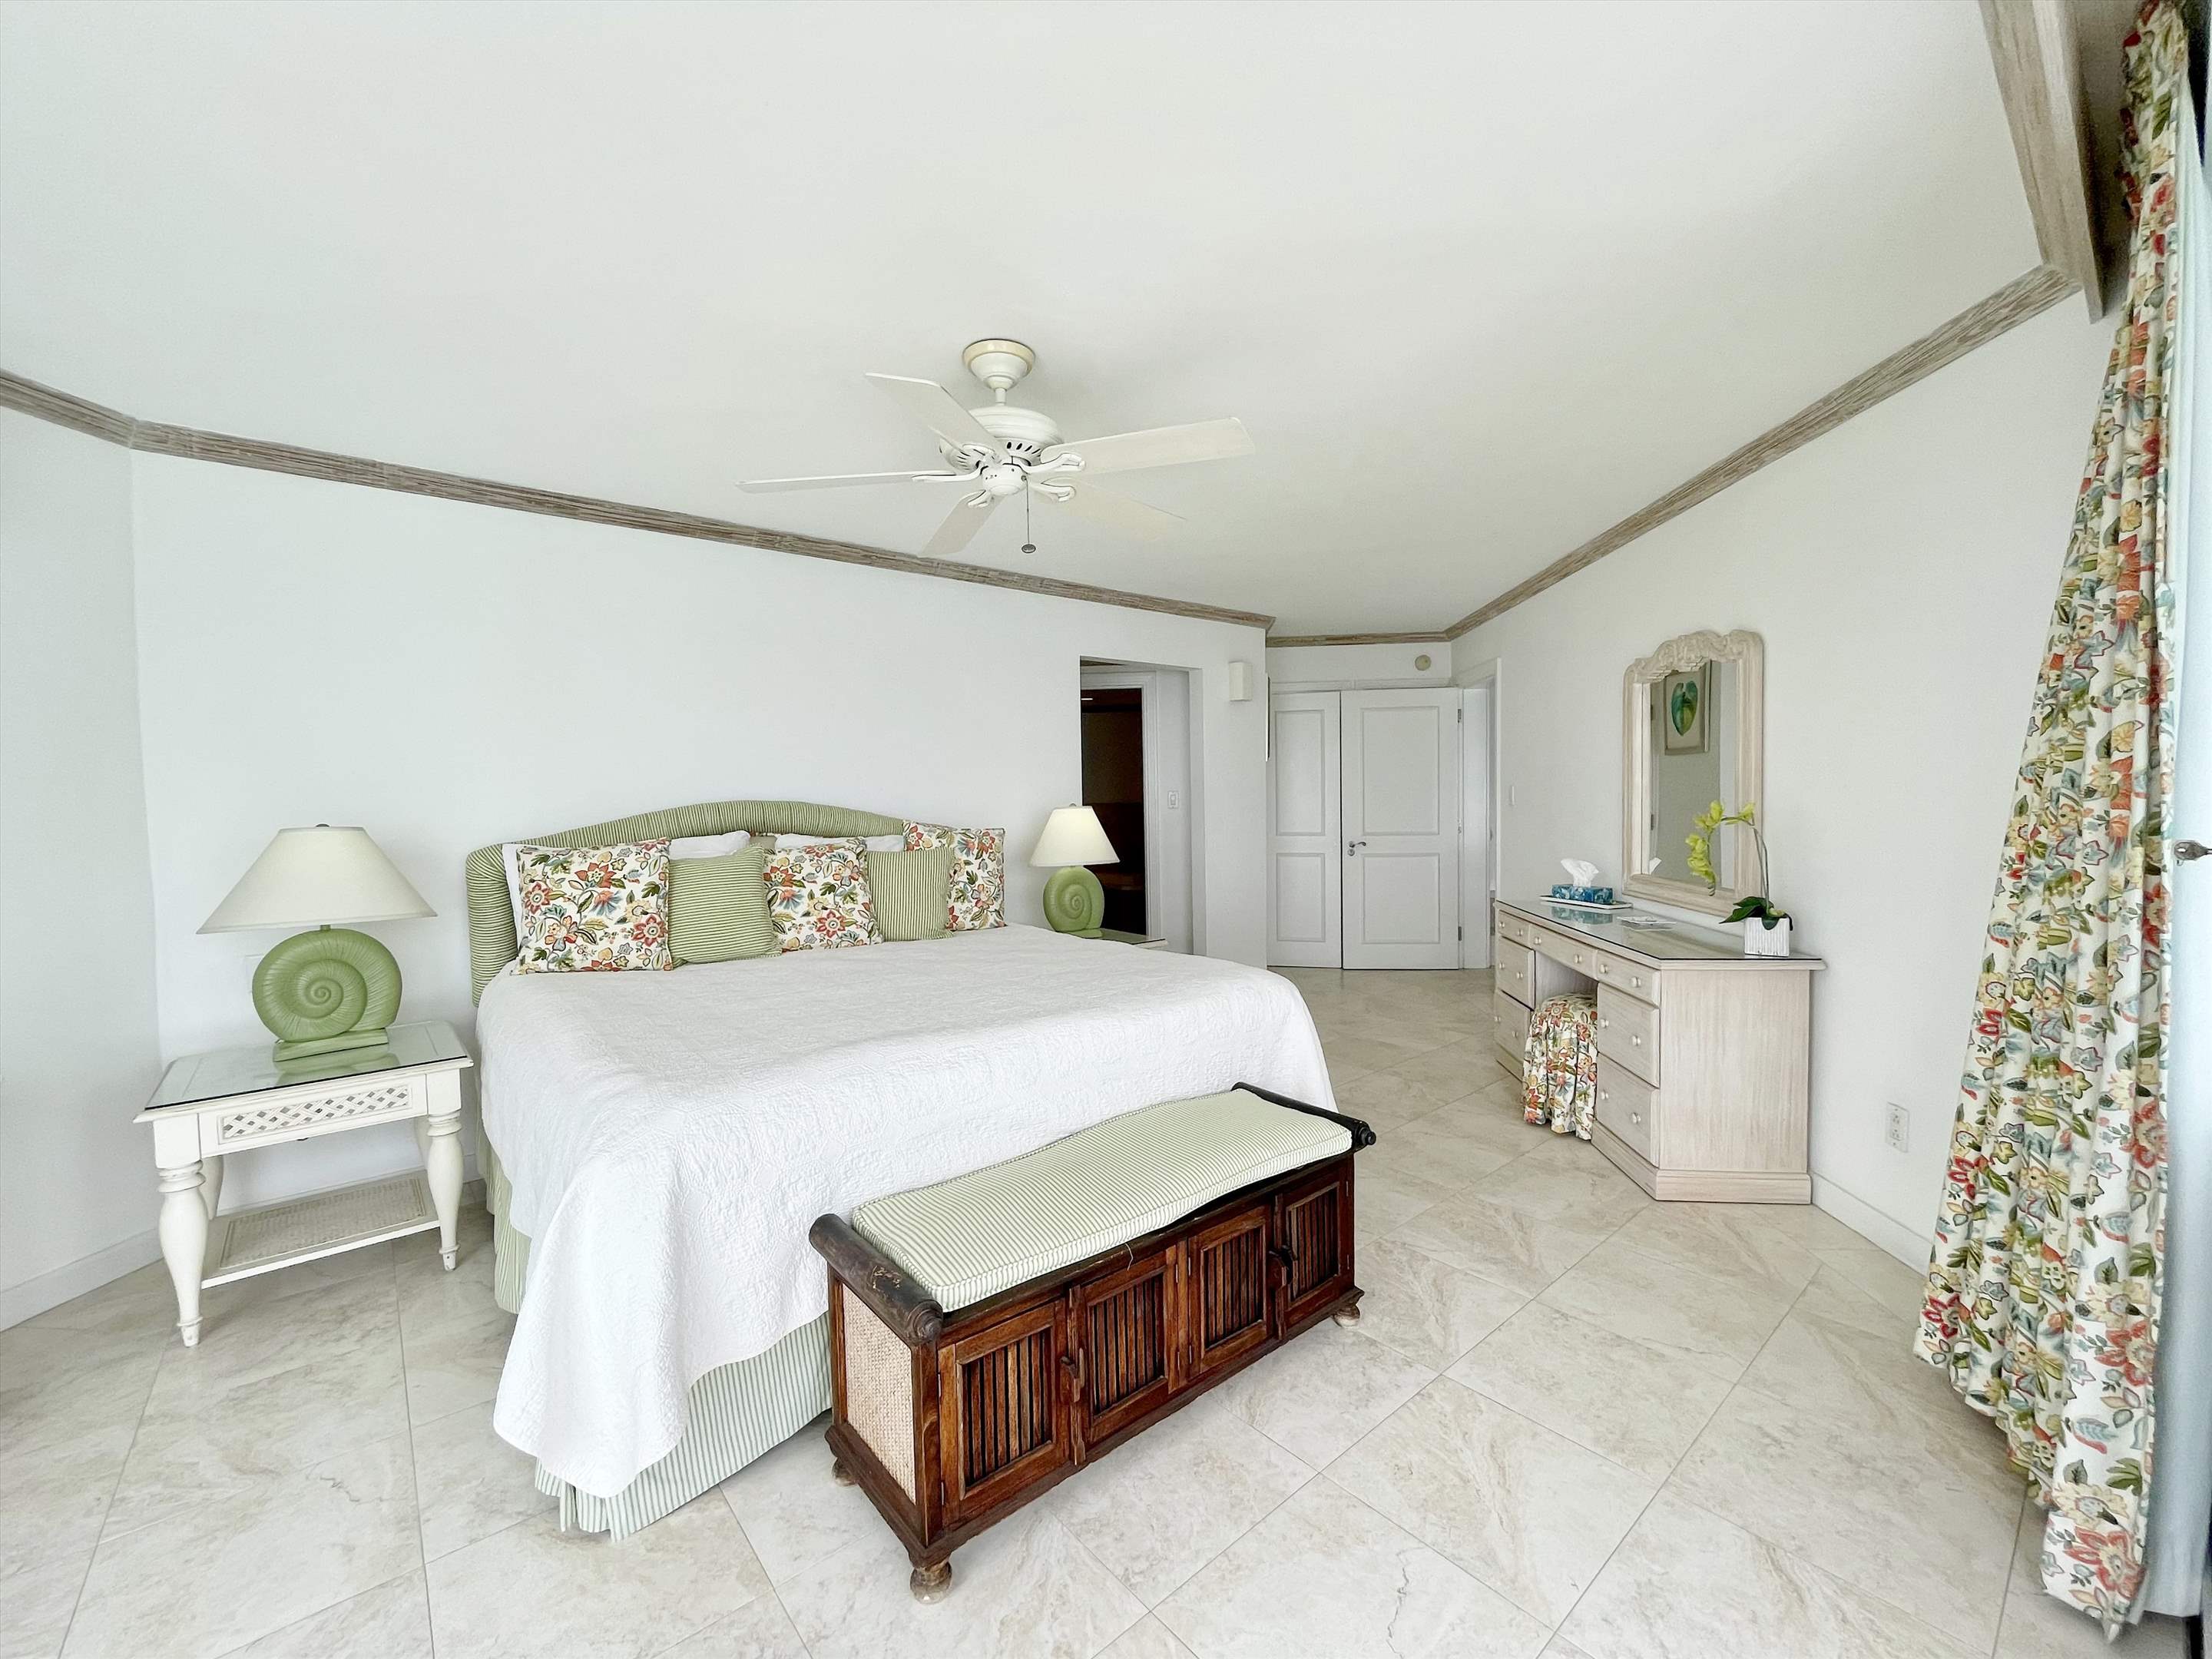 Villas on the Beach 403, 3 bedroom, 3 bedroom apartment in St. James & West Coast, Barbados Photo #9